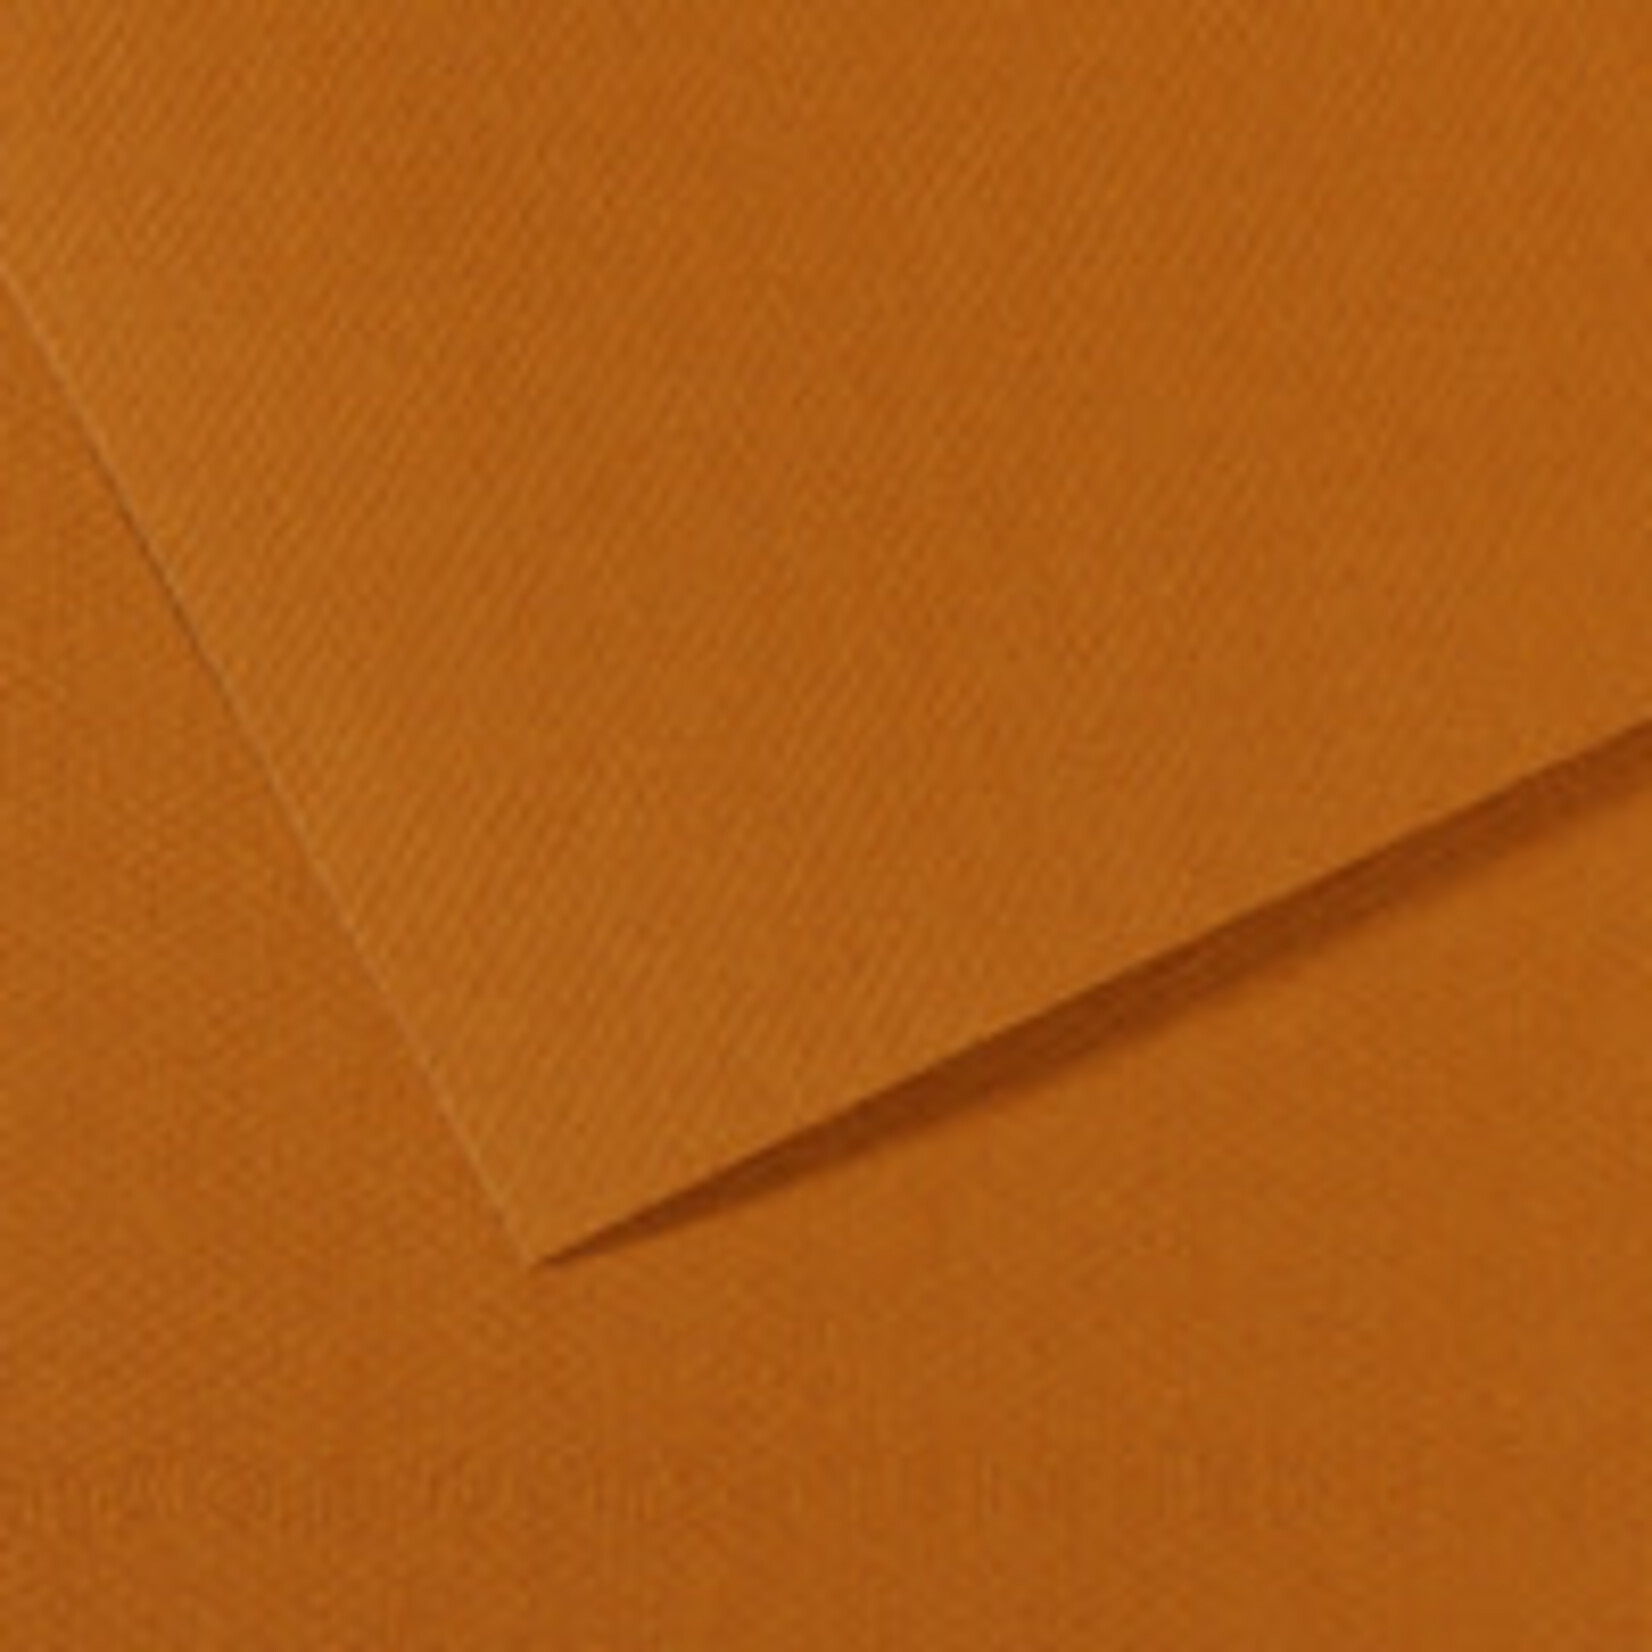 Canson Mi-Teintes Paper Sheets, 19'' x 25'', Bisque